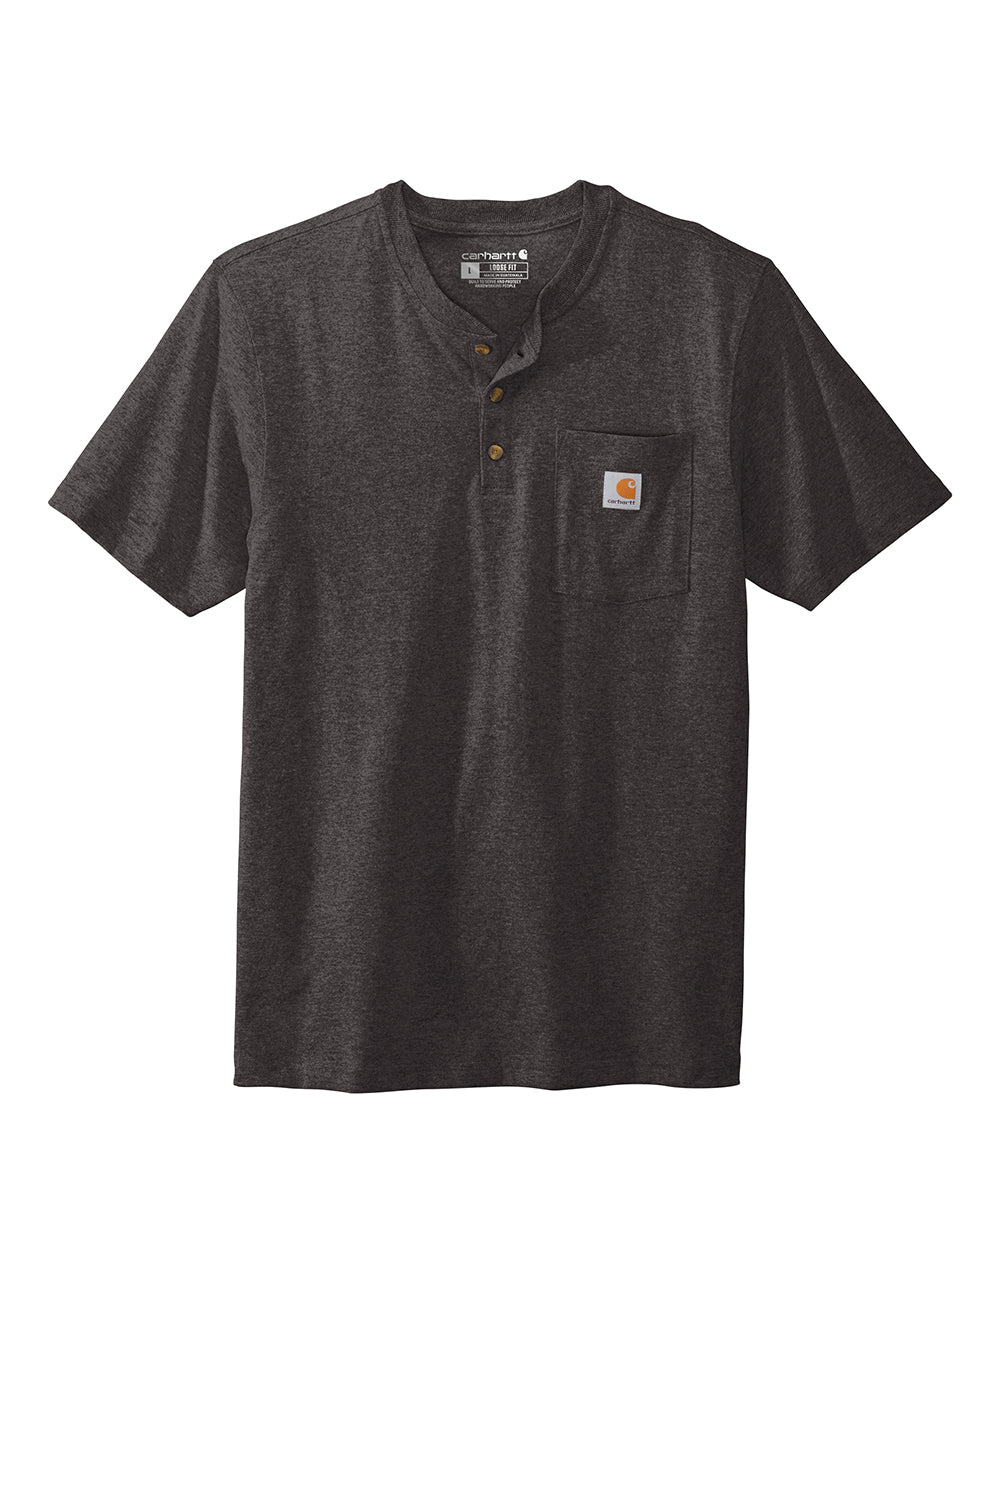 Carhartt CTK84 Mens Short Sleeve Henley T-Shirt w/ Pocket Heather Carbon Grey Flat Front